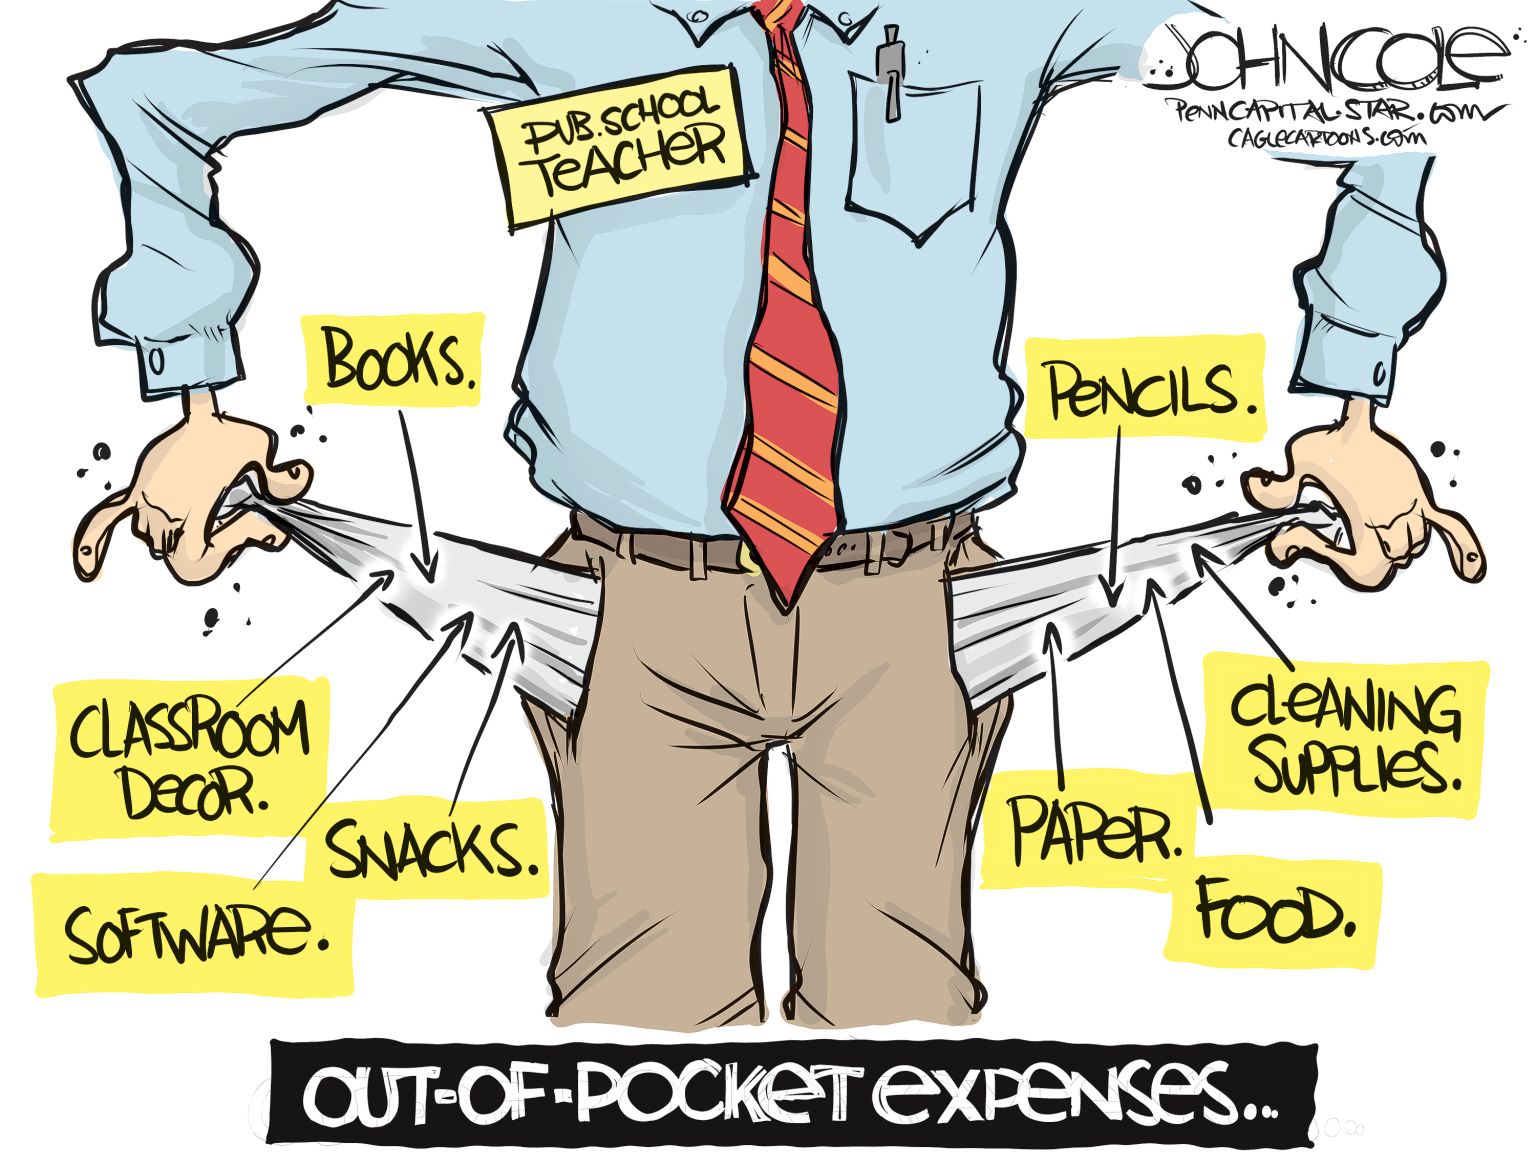 Teacher expenses - newsjustin.press - editorial cartoon